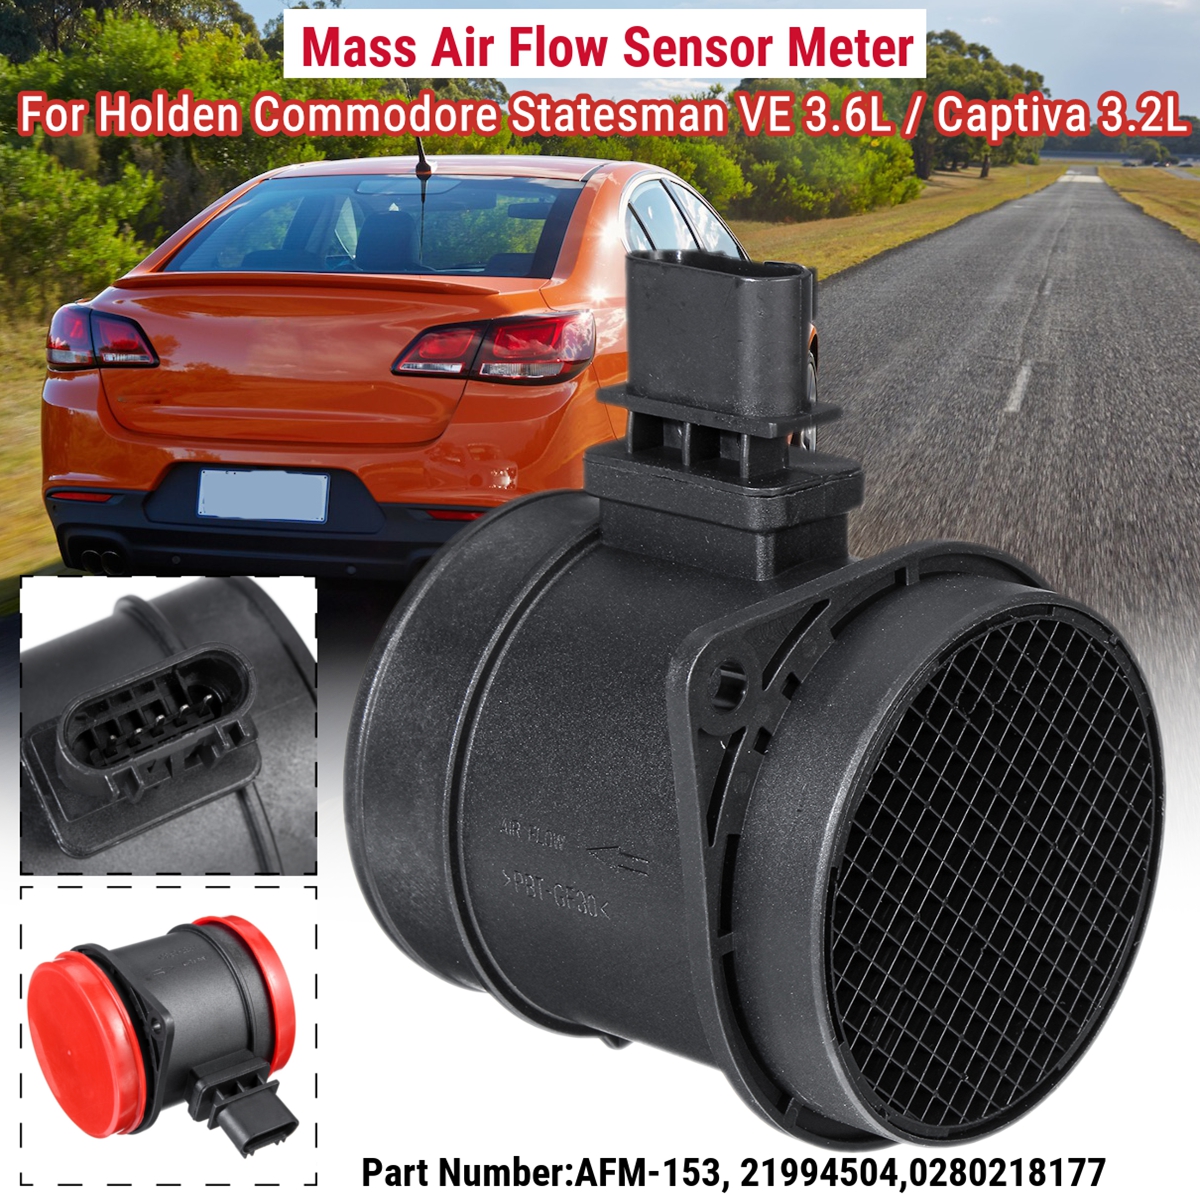 Mass-Air-Flow-Sensor-Meter-MAF-For-Holden-Commodore-Statesman-VE-Captiva-32L-1678799-1